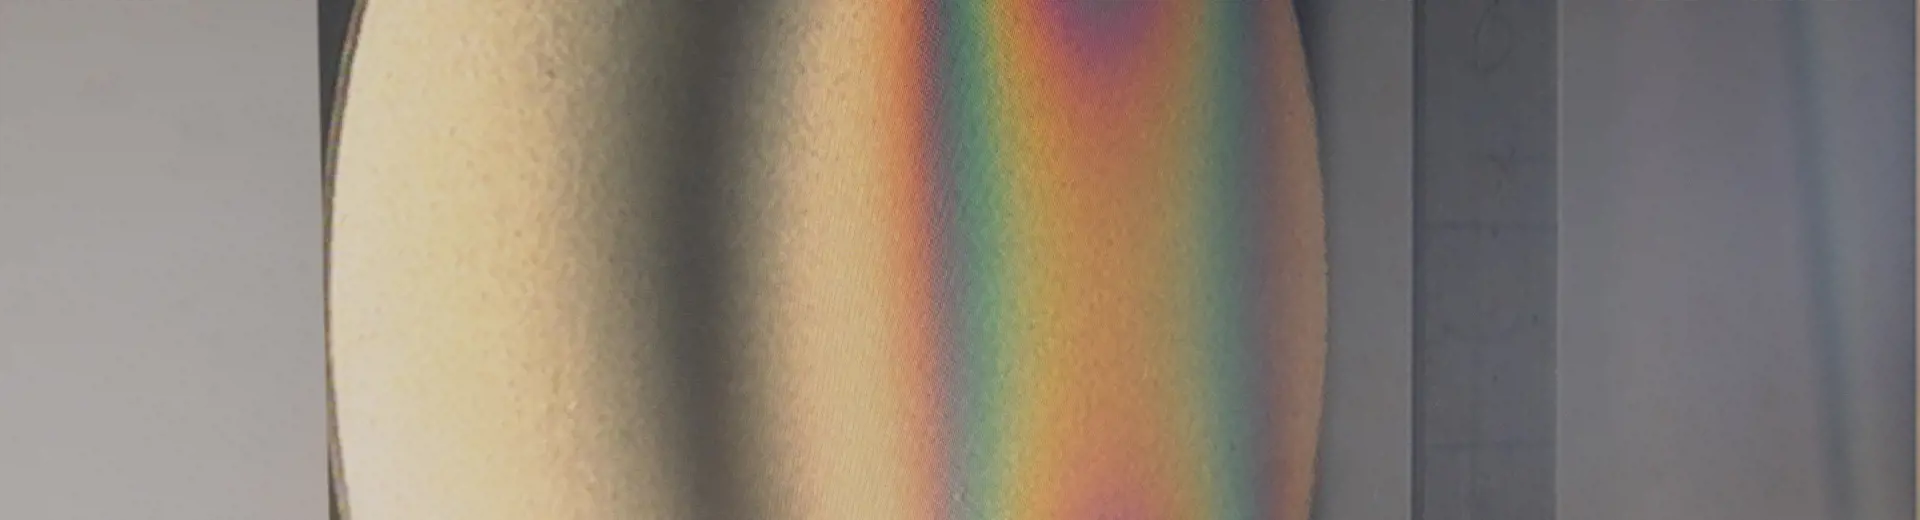 Optical rainbow effect